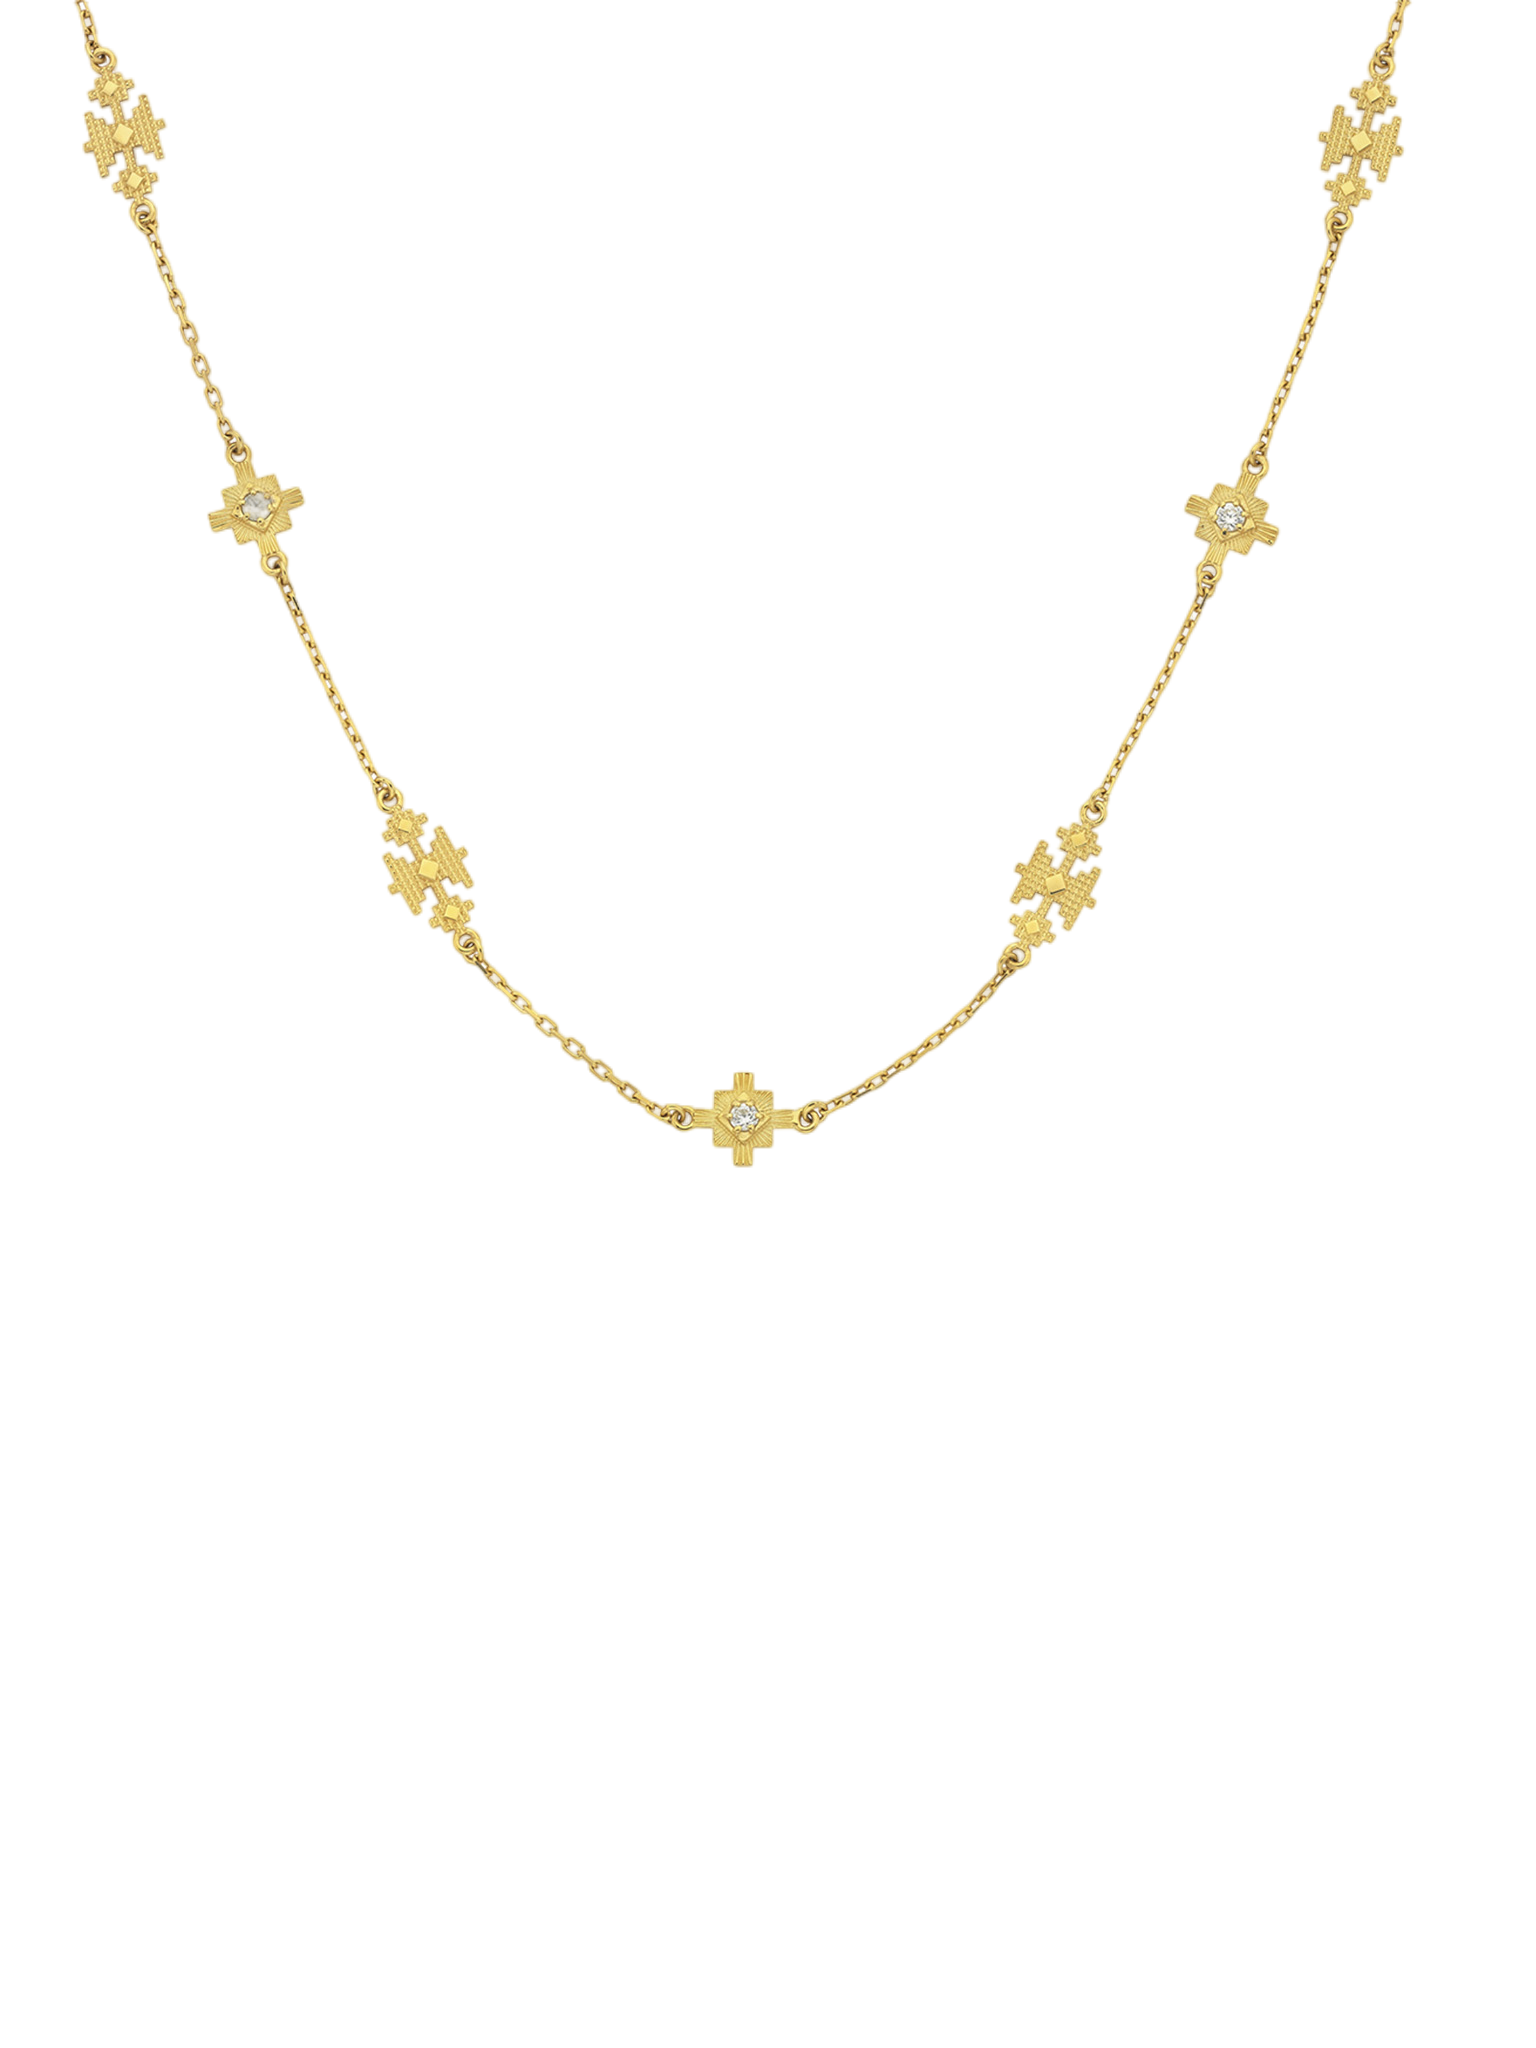 Ayllu necklace